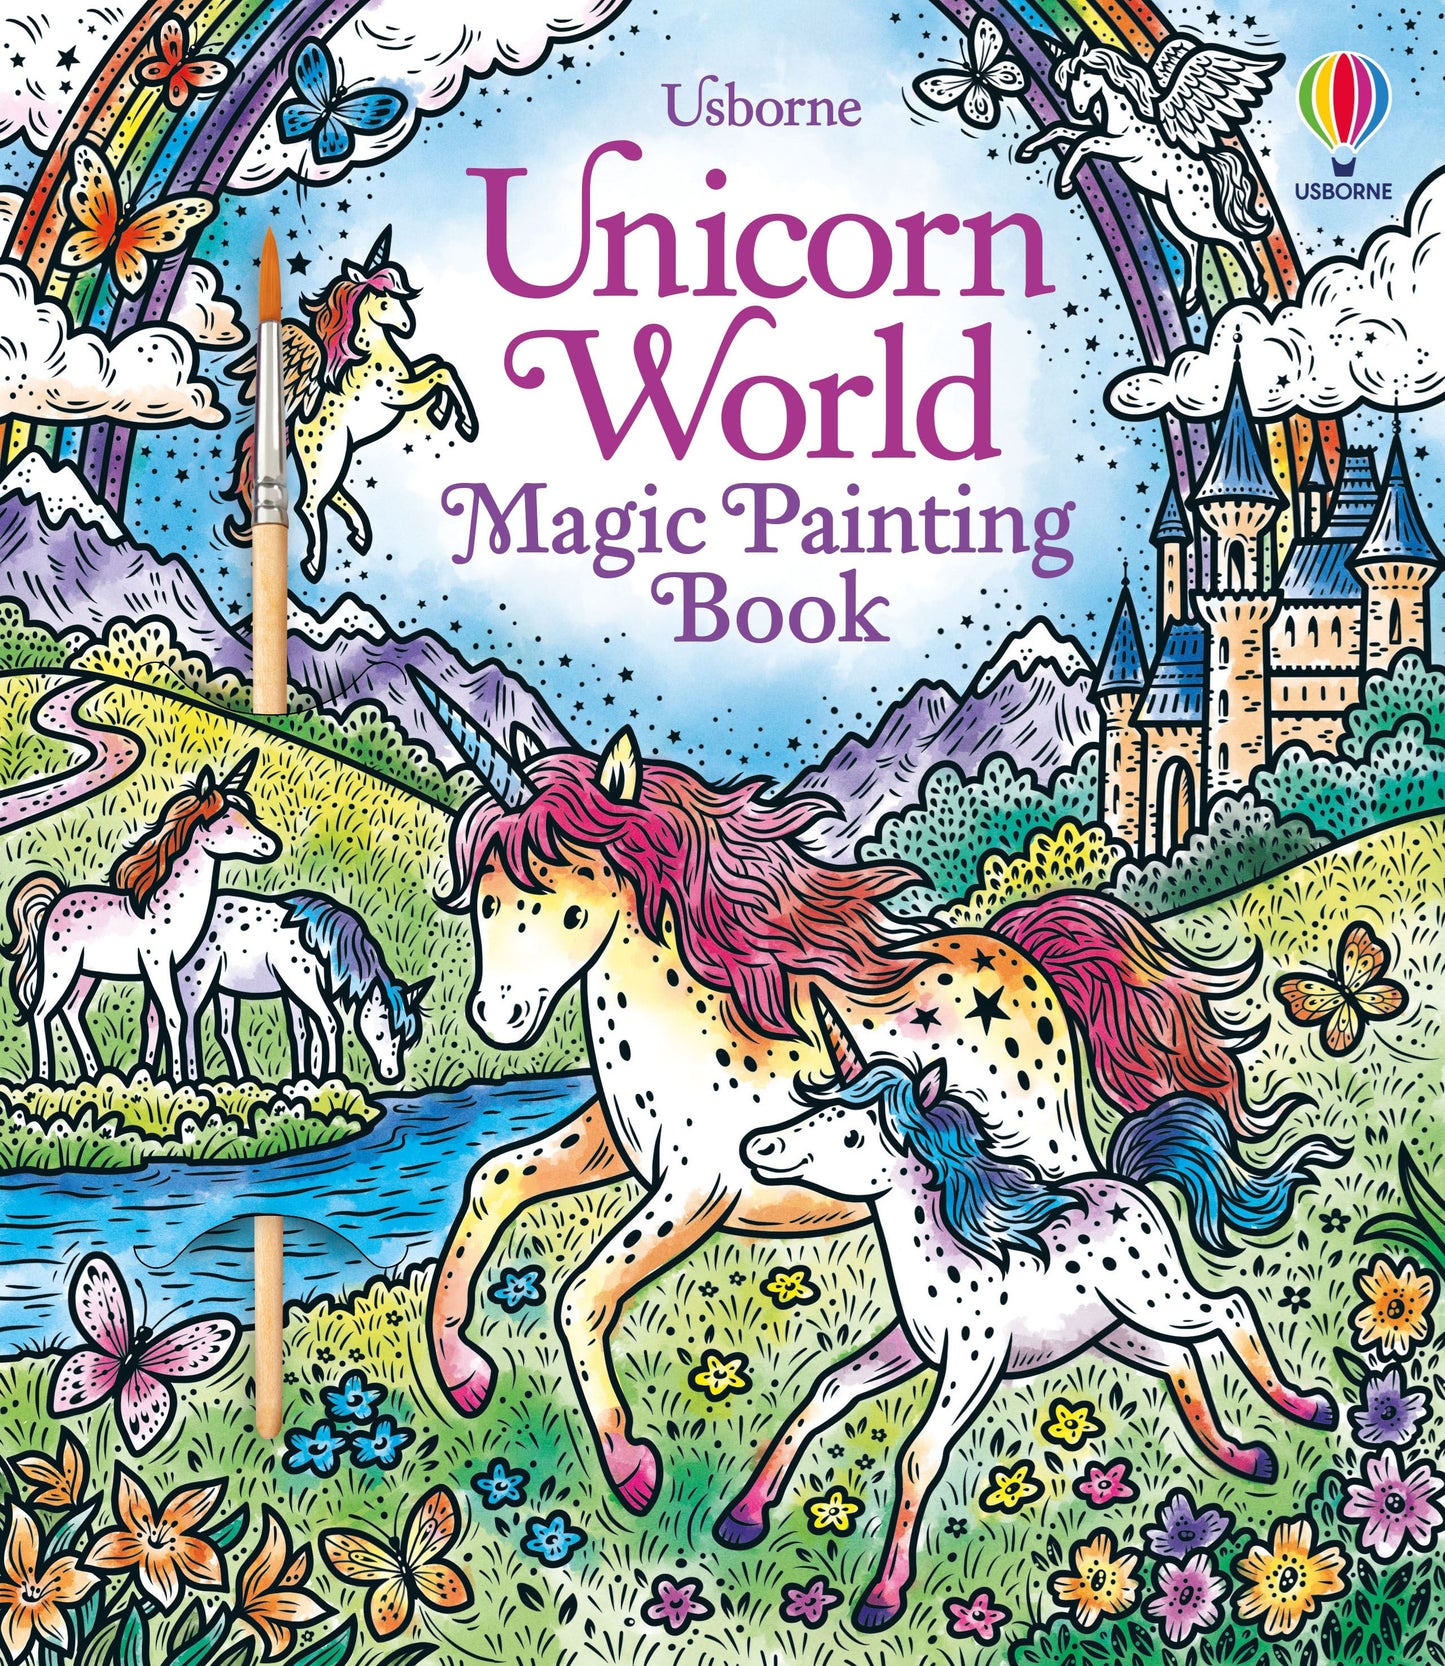 Unicorn World Magic Painting